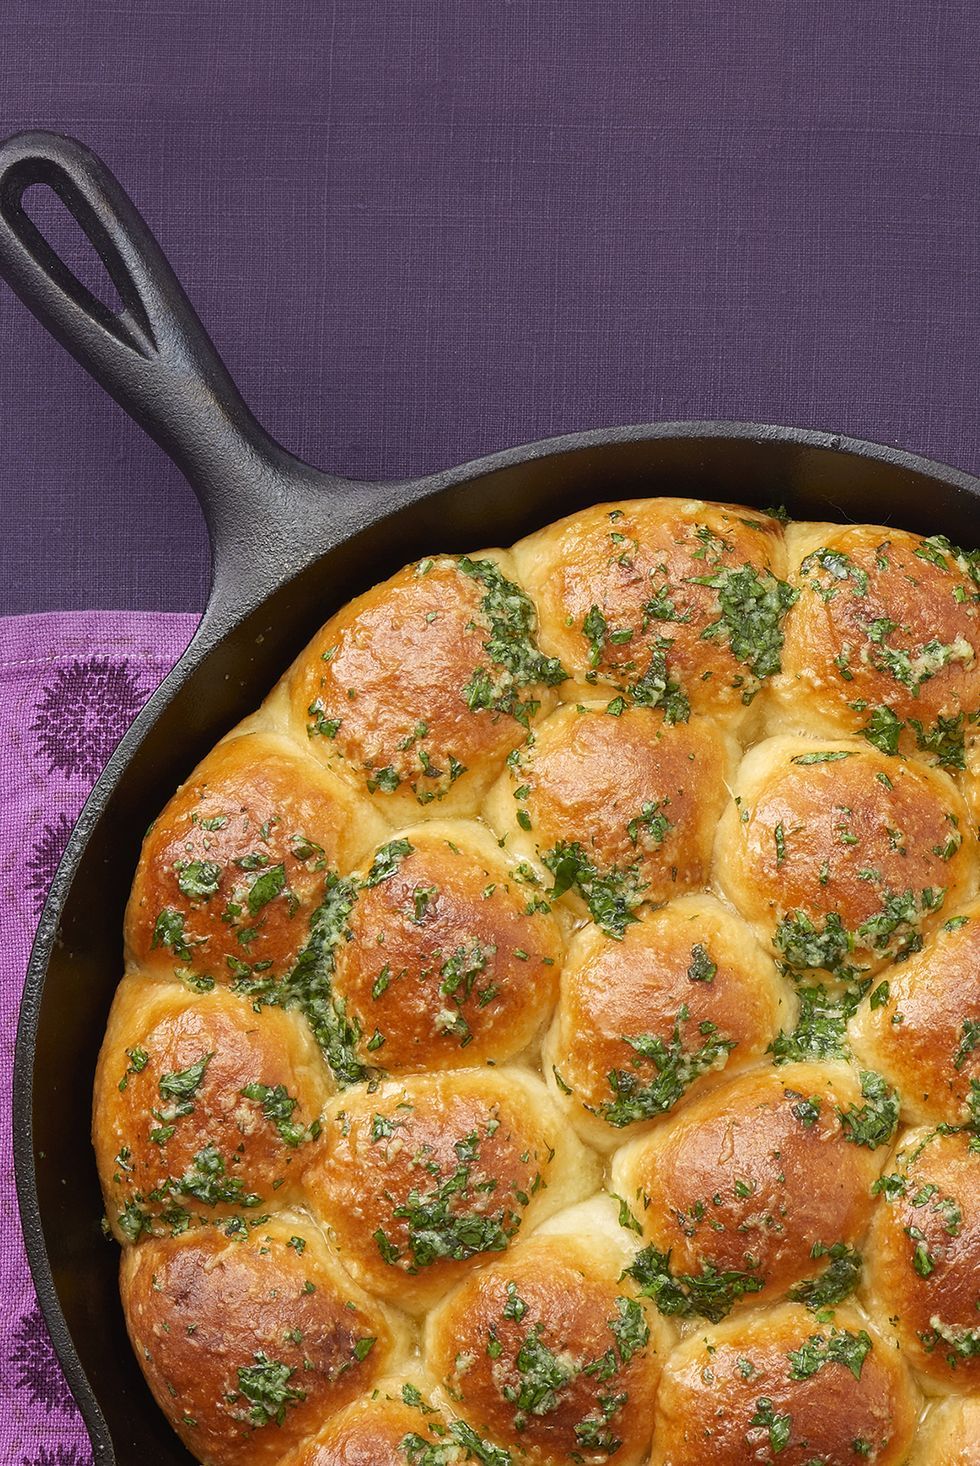 https://hips.hearstapps.com/hmg-prod/images/cast-iron-skillet-recipes-skillet-dinner-rolls-with-garlic-herb-butter-1629744660.jpeg